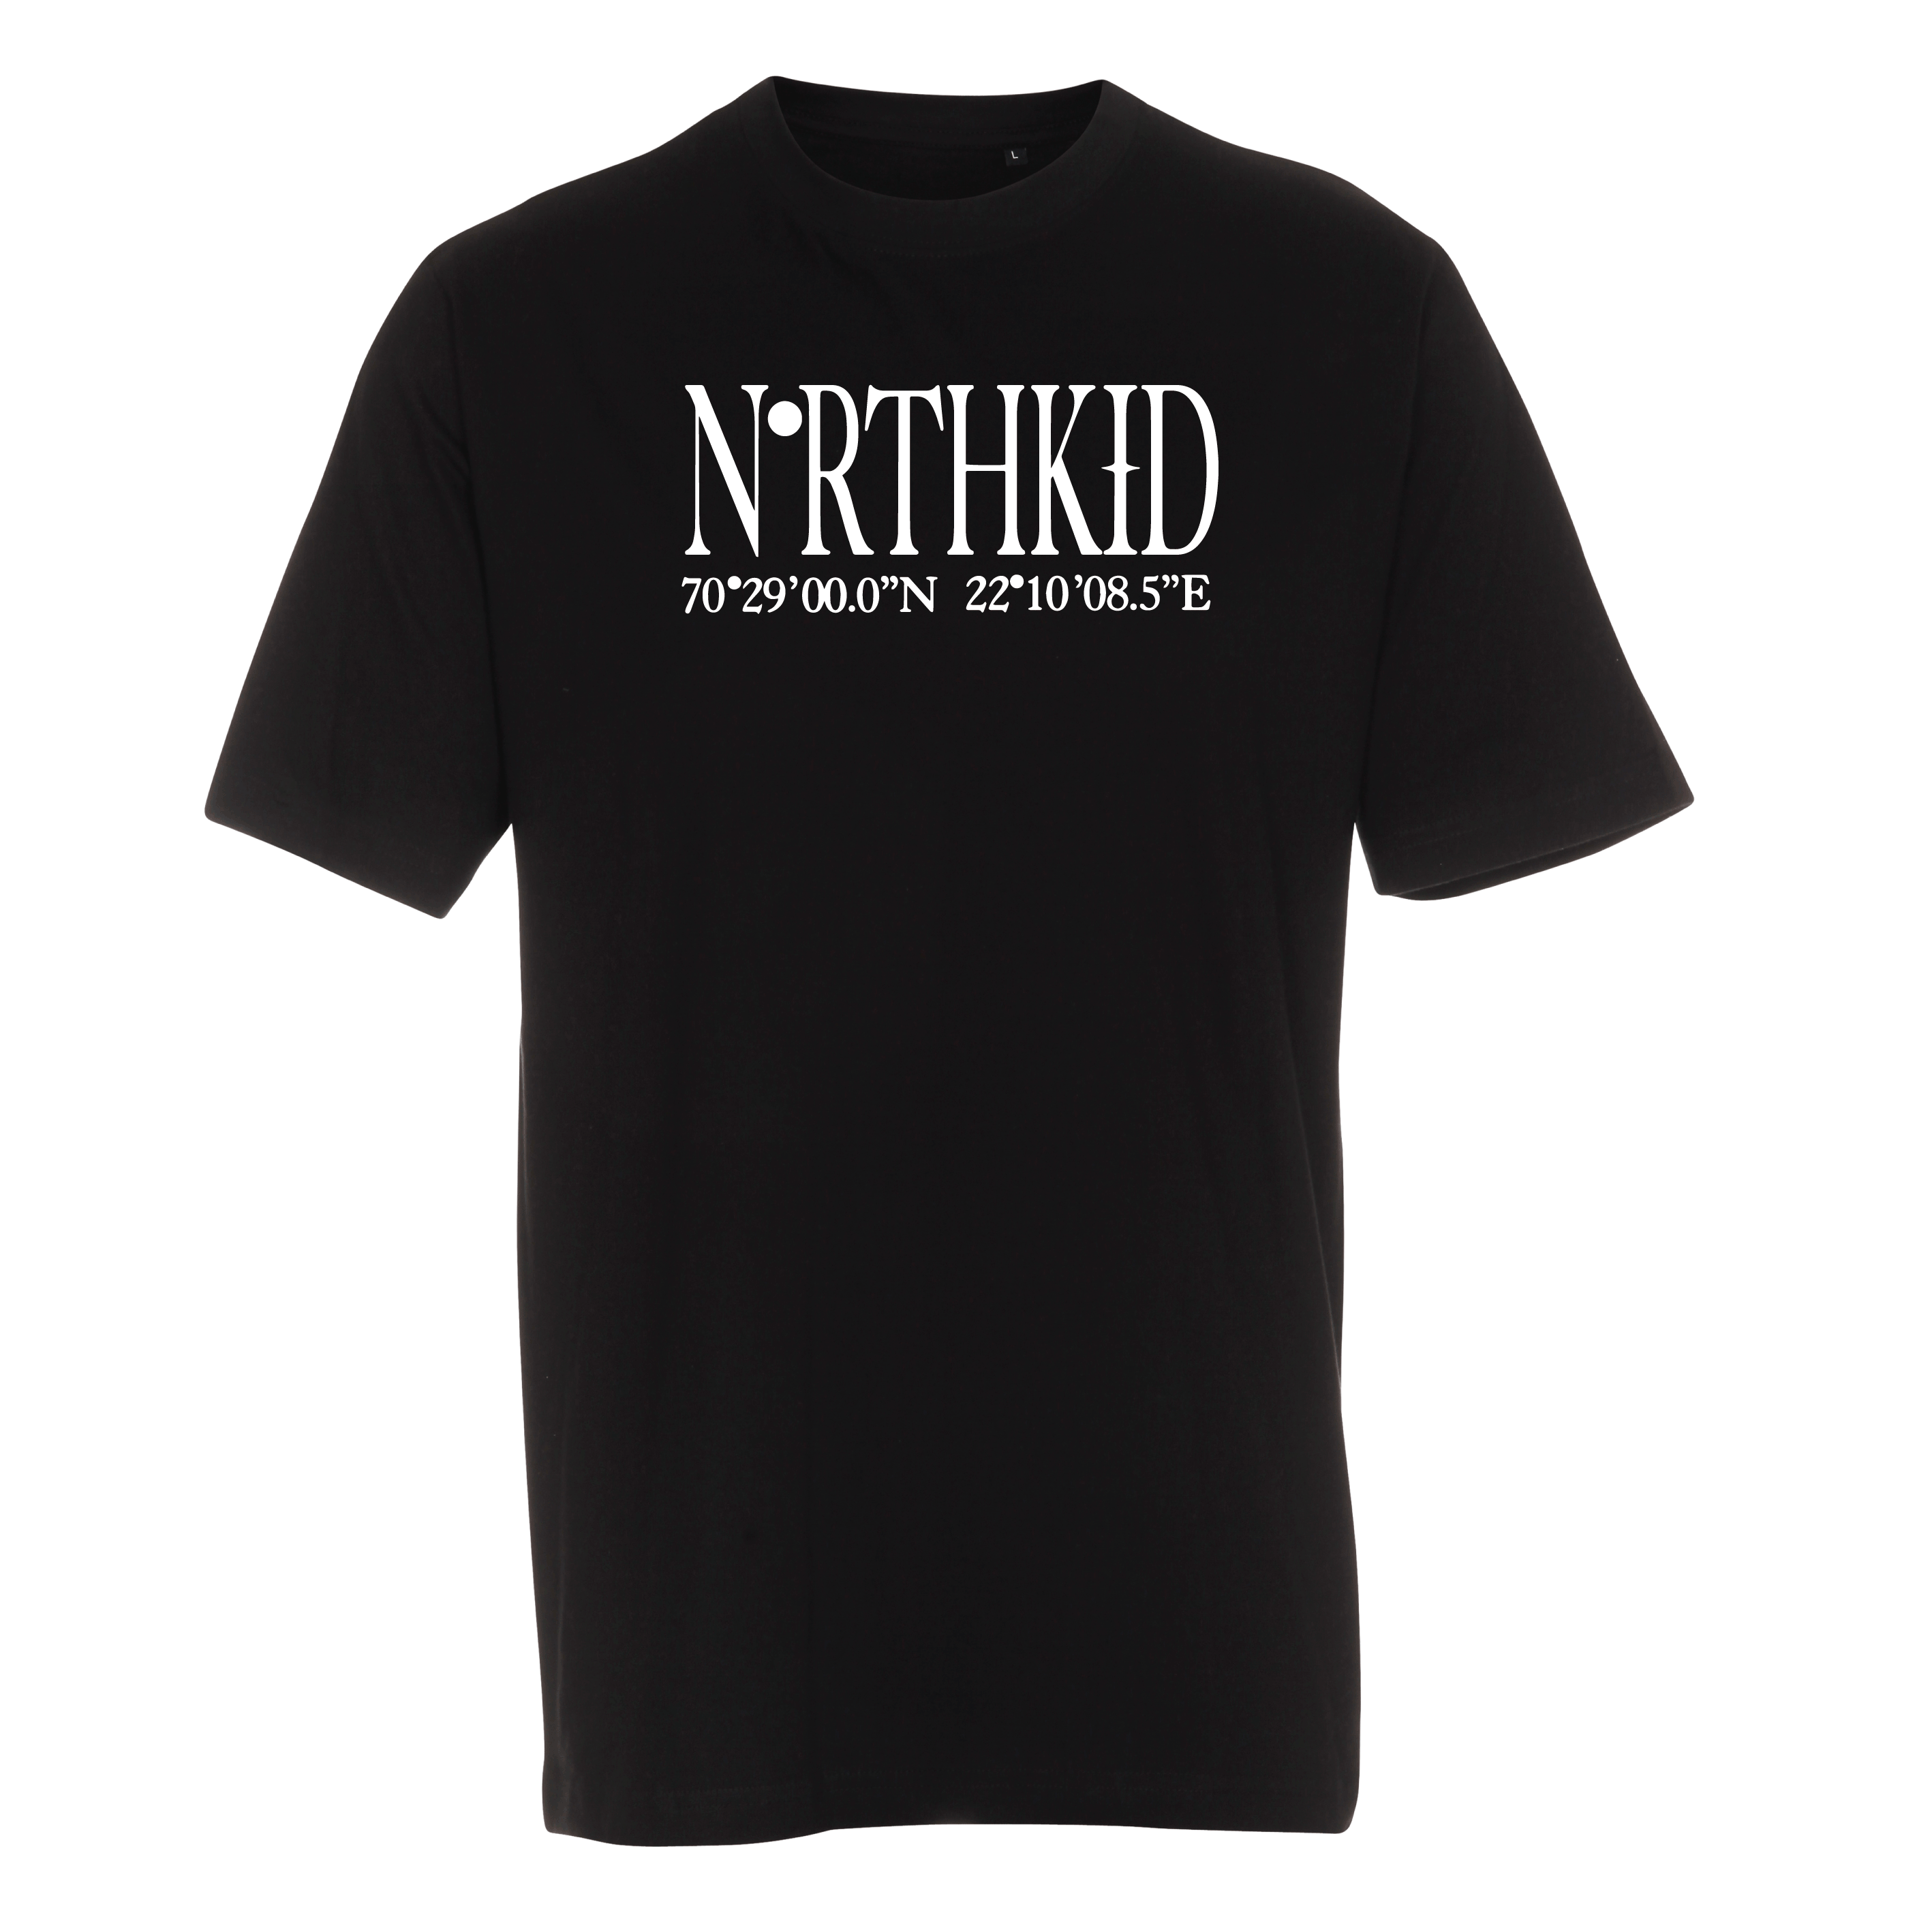 Northkid - T-shirt - black - NORTHKID